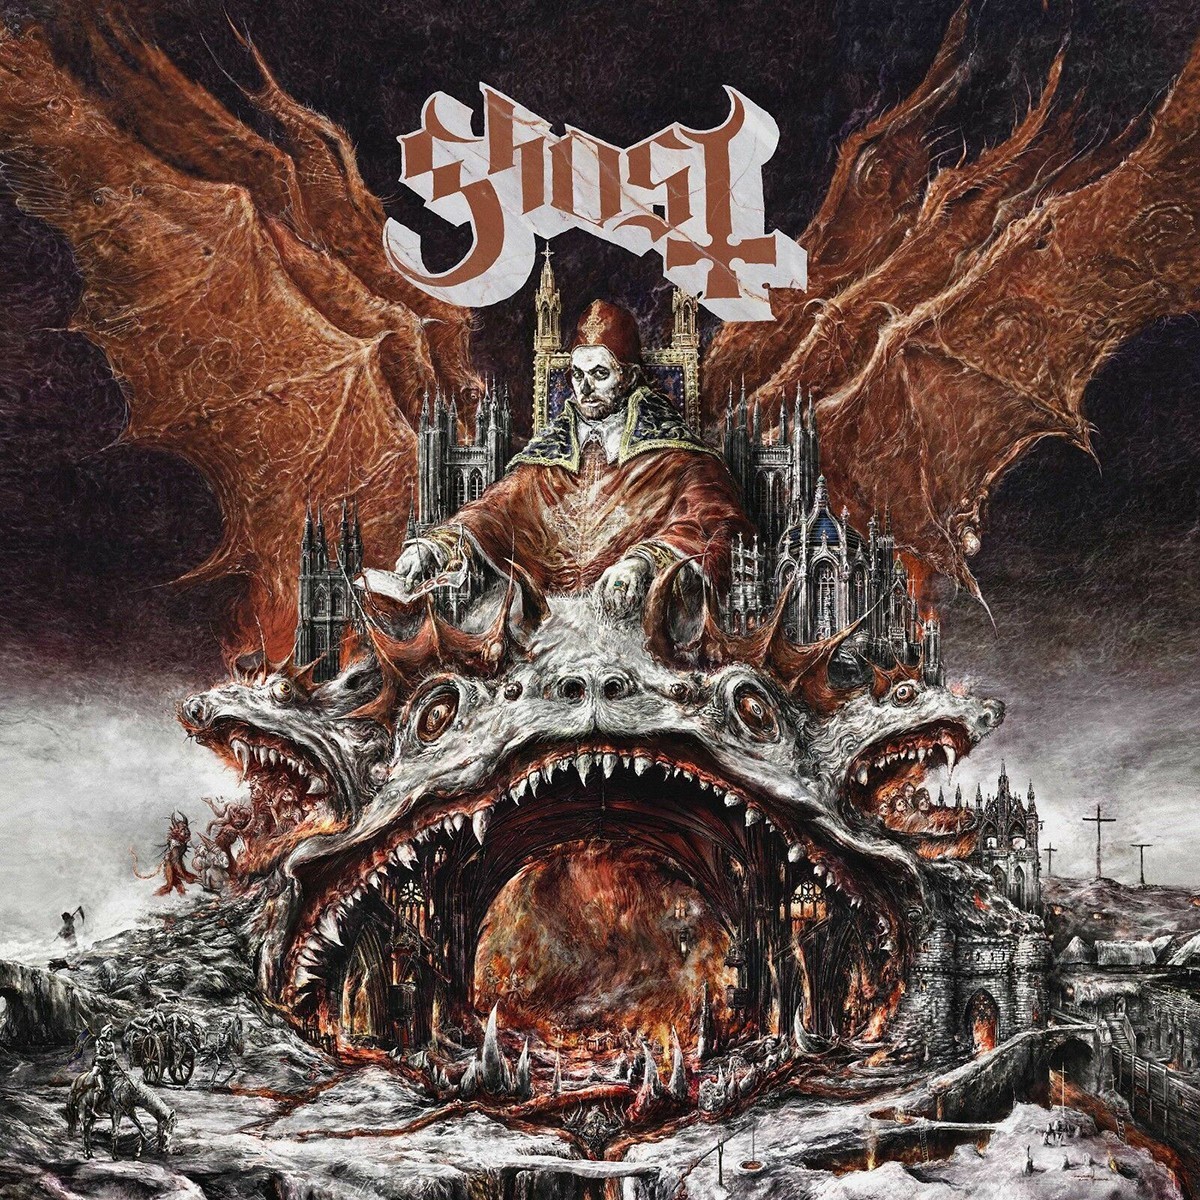 Обложка альбома "Prequelle" группы "Ghost"